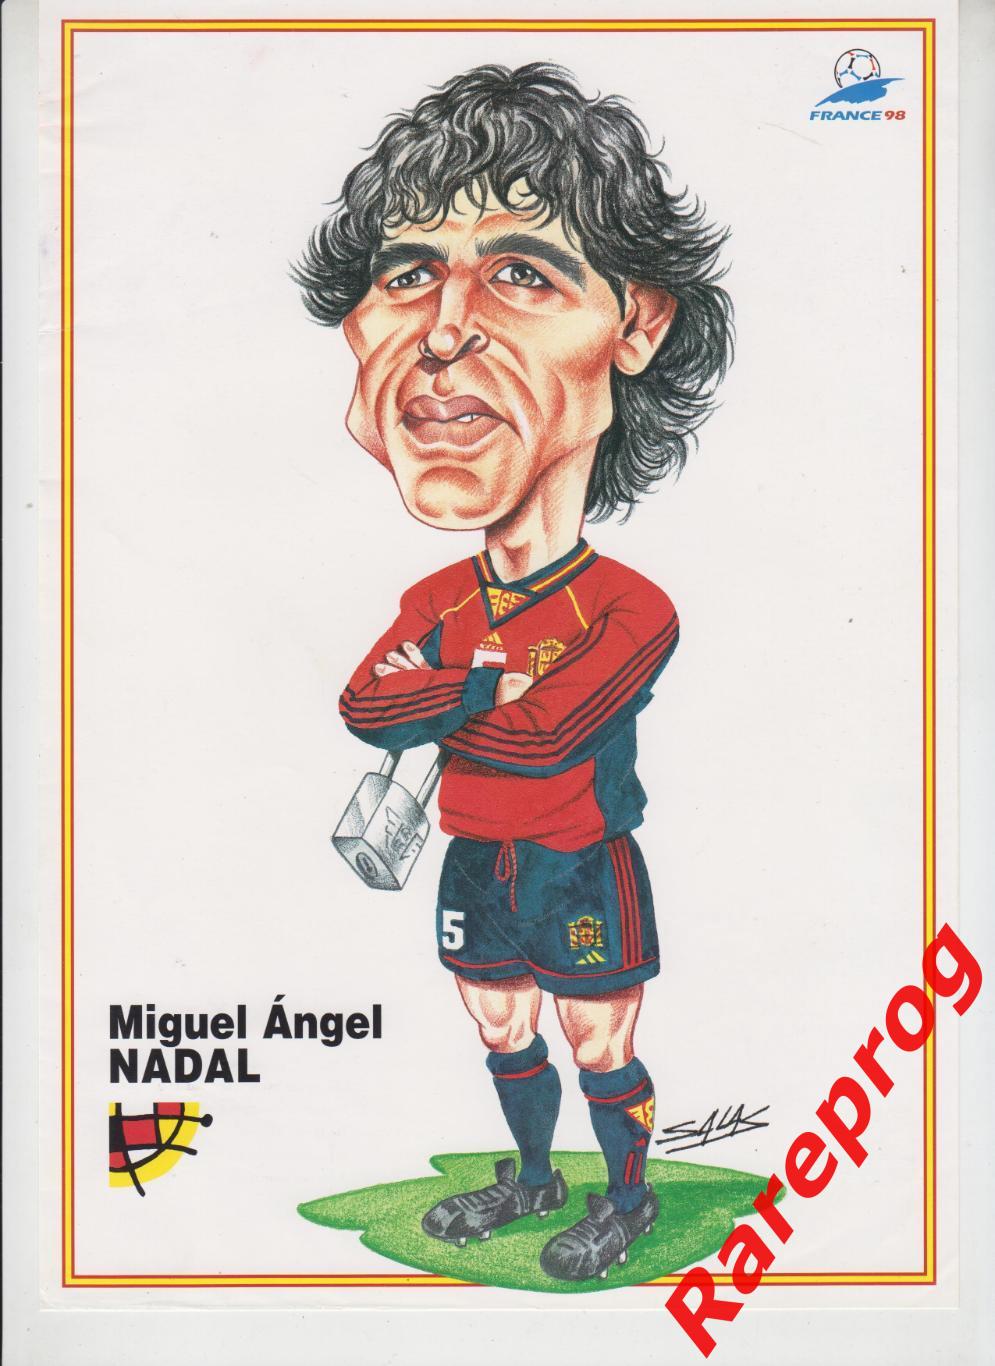 журнал Футбол RFEF Испания № 13 - апрель 1998 + постер 1